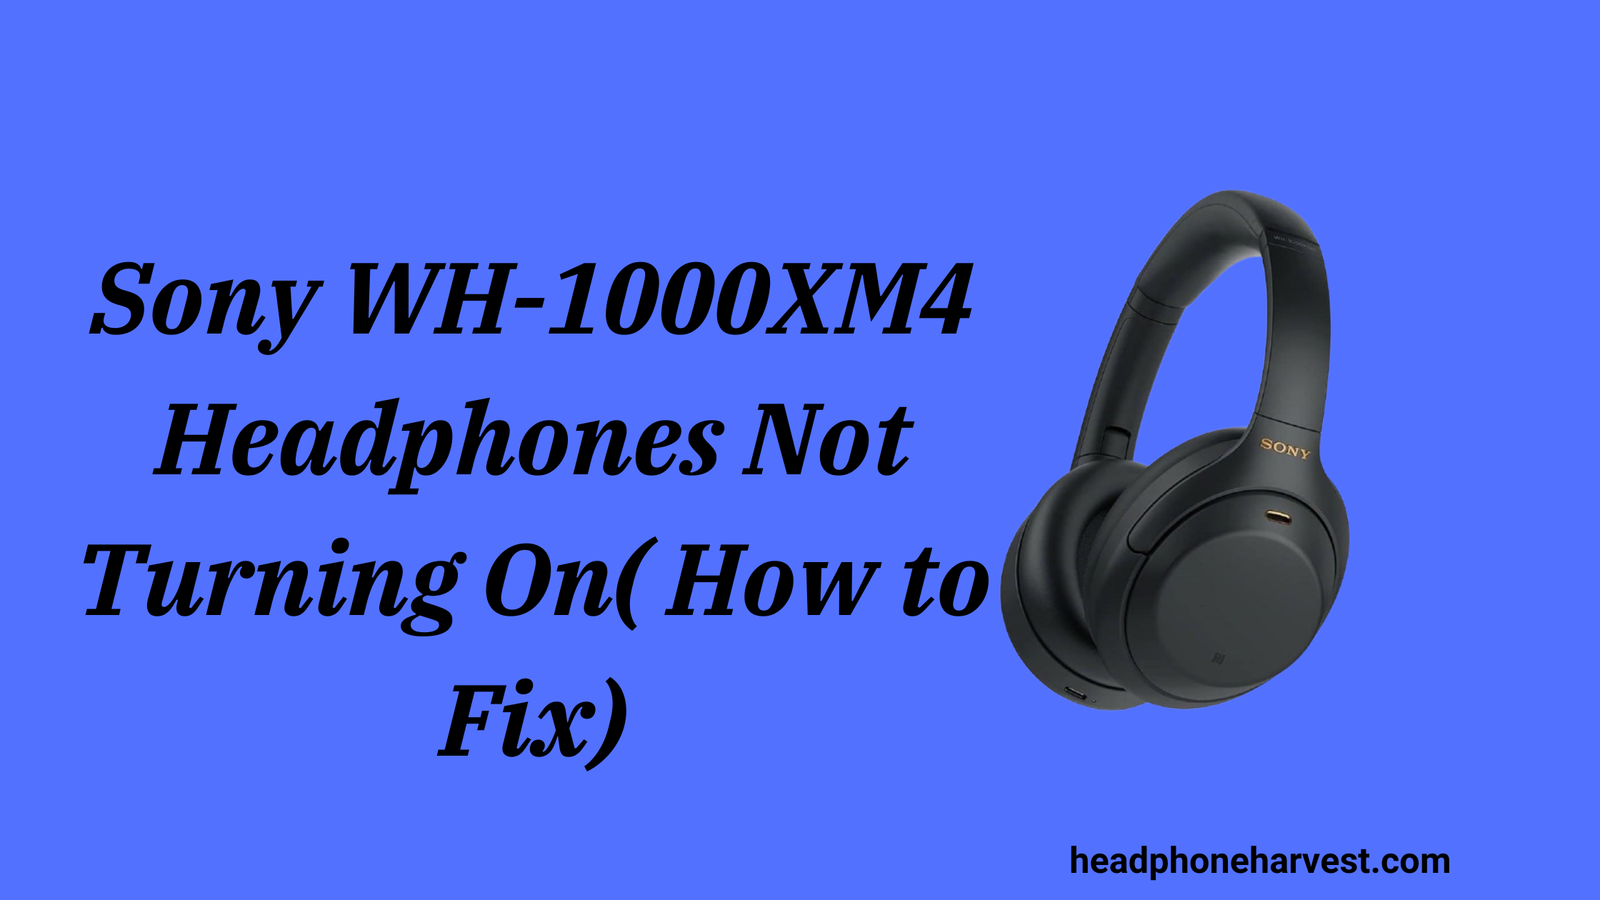 Sony WH-1000XM4 Headphones Not Turning On